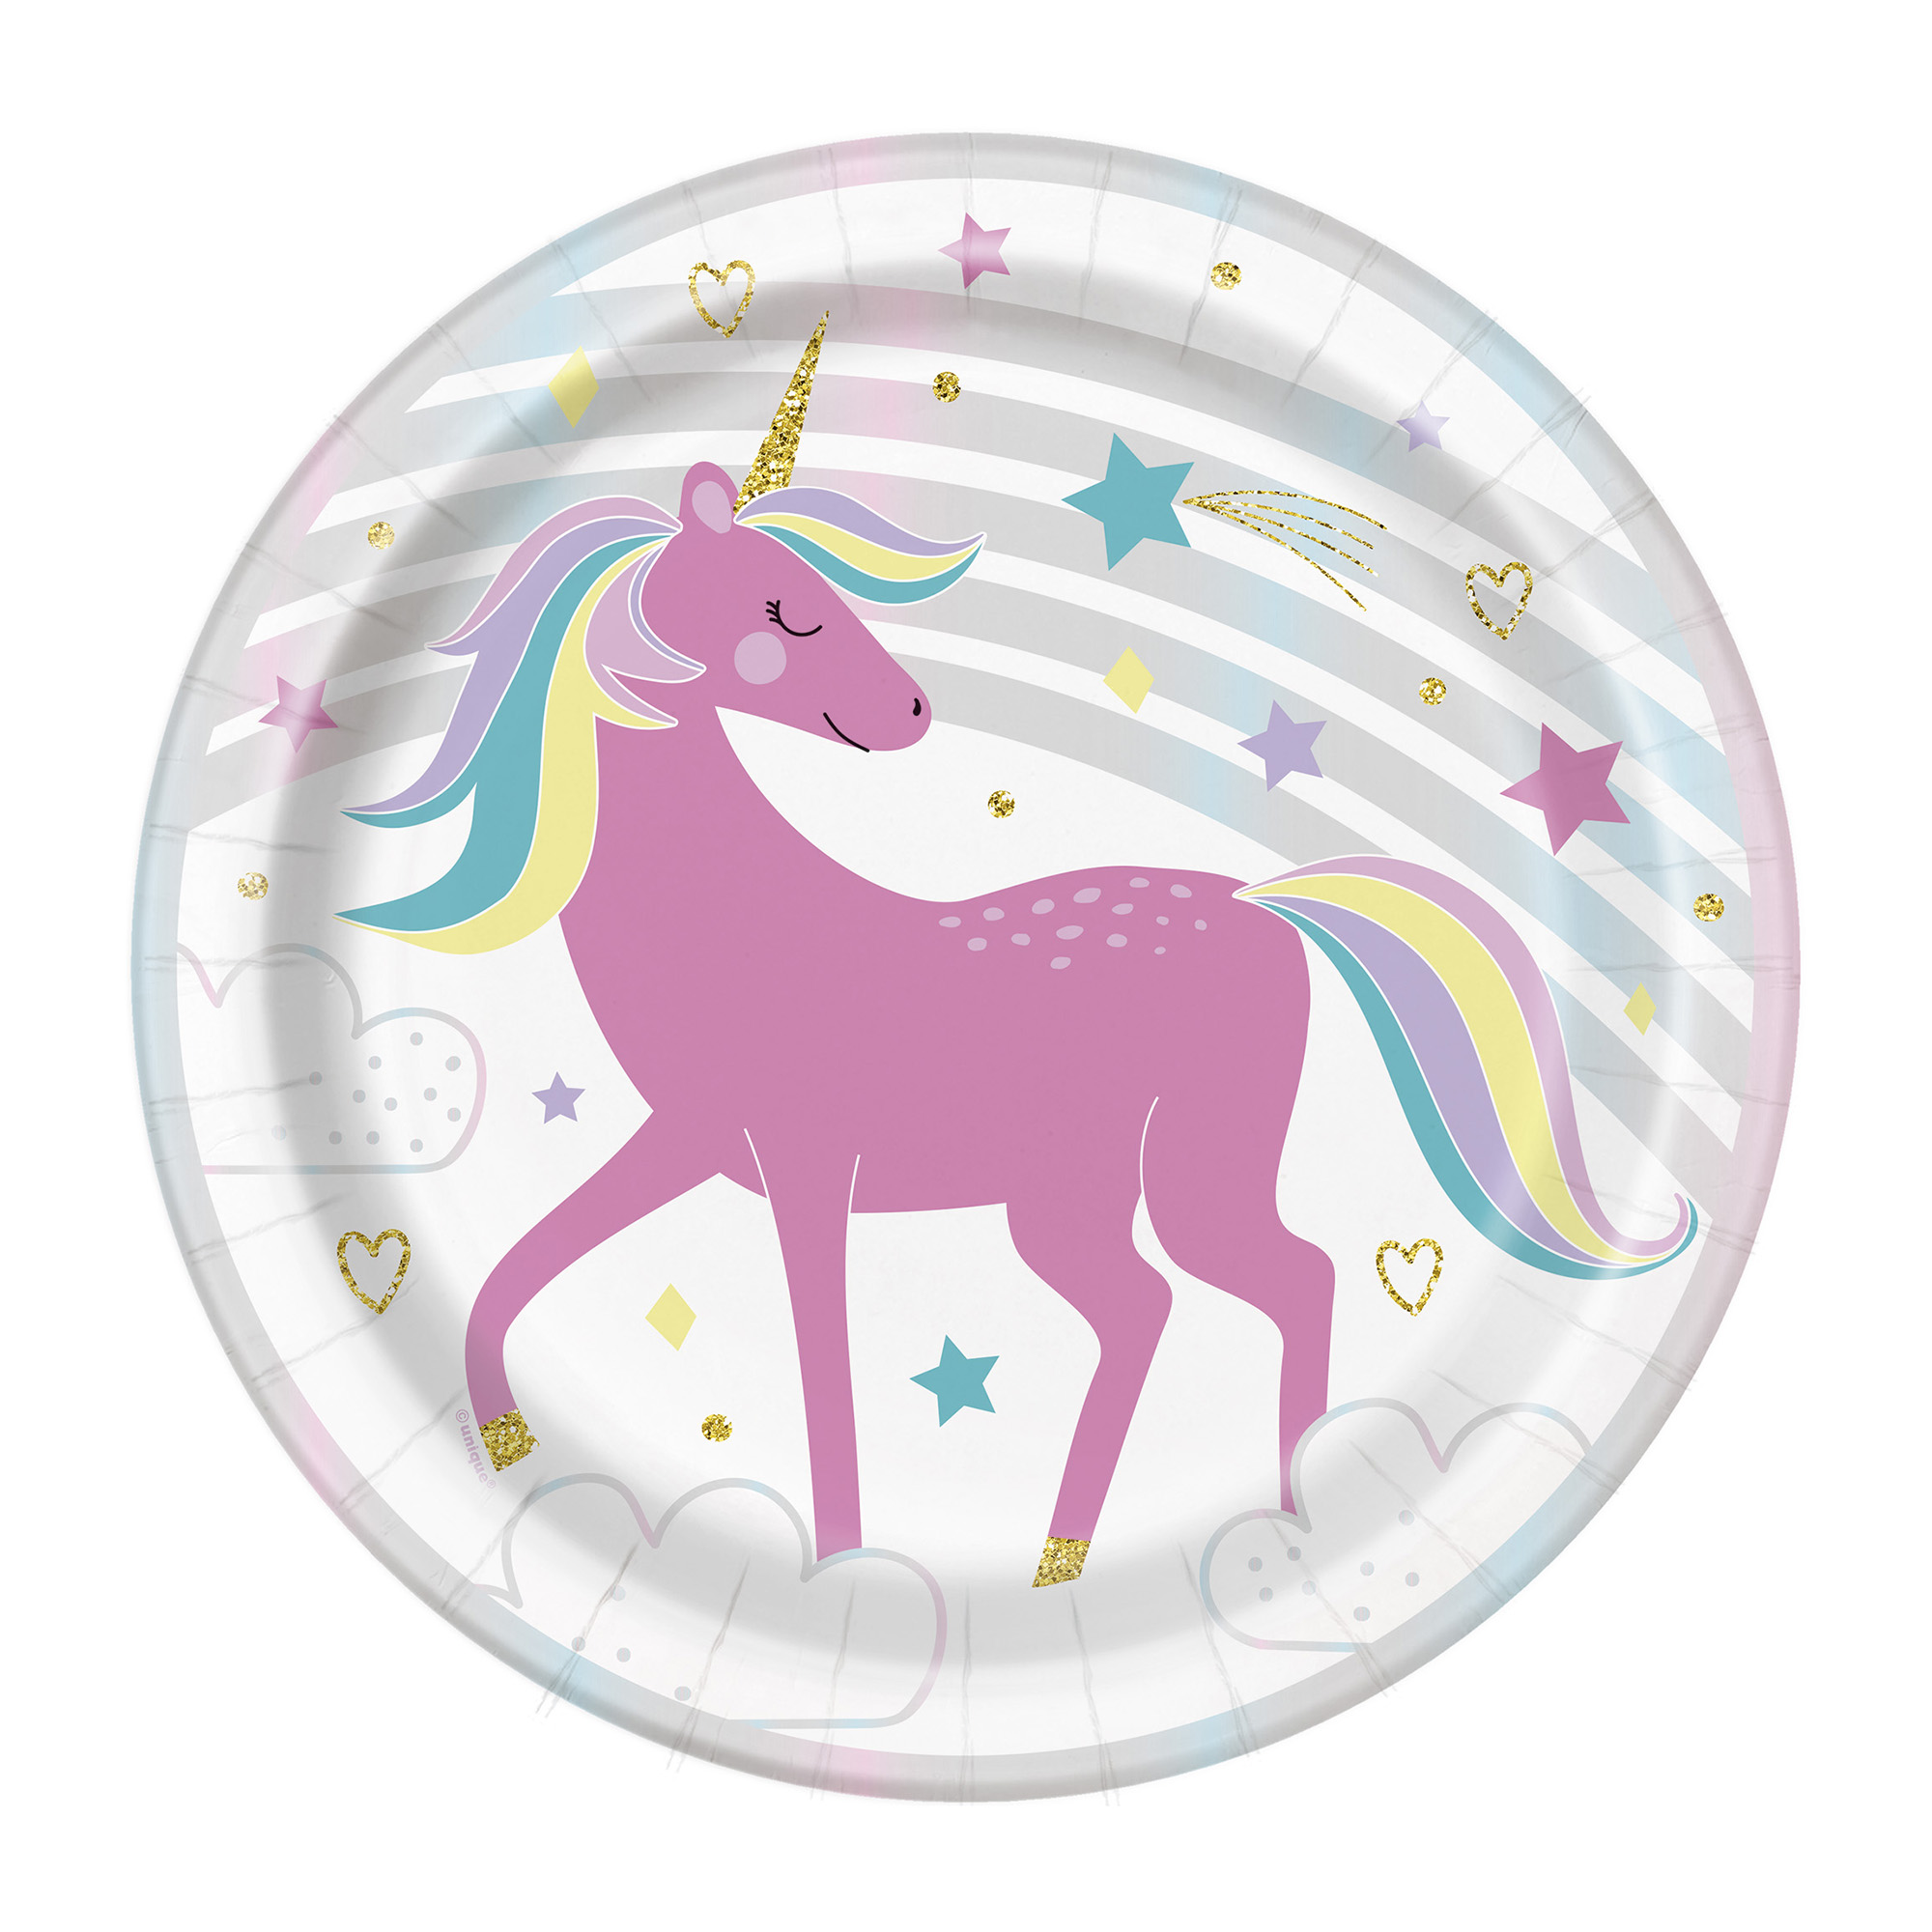 7in magical unicorn paper dessert plates 8-count